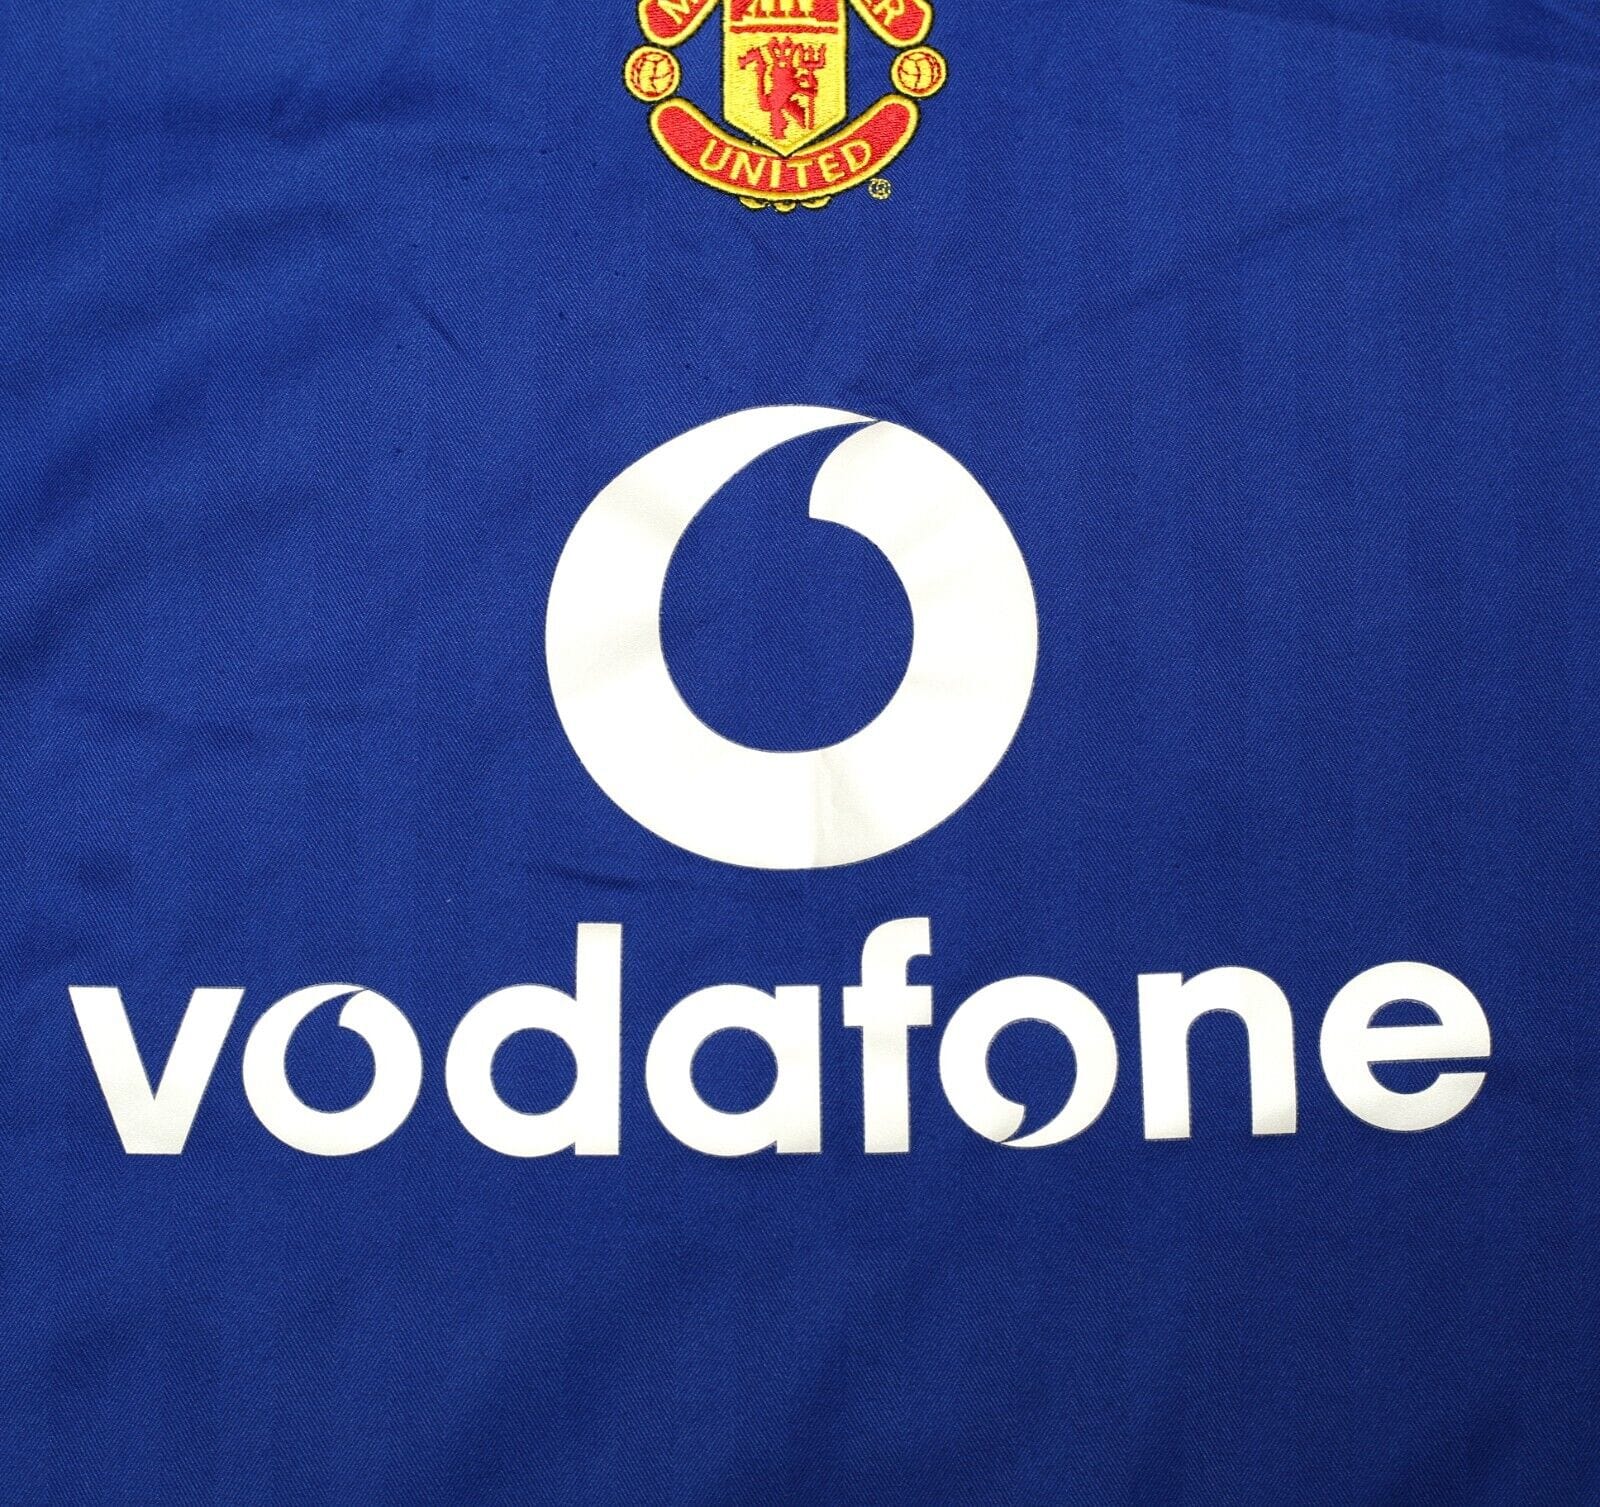 2005/06 RONALDO #7 Manchester United Vintage Nike Away Football Shirt (L)